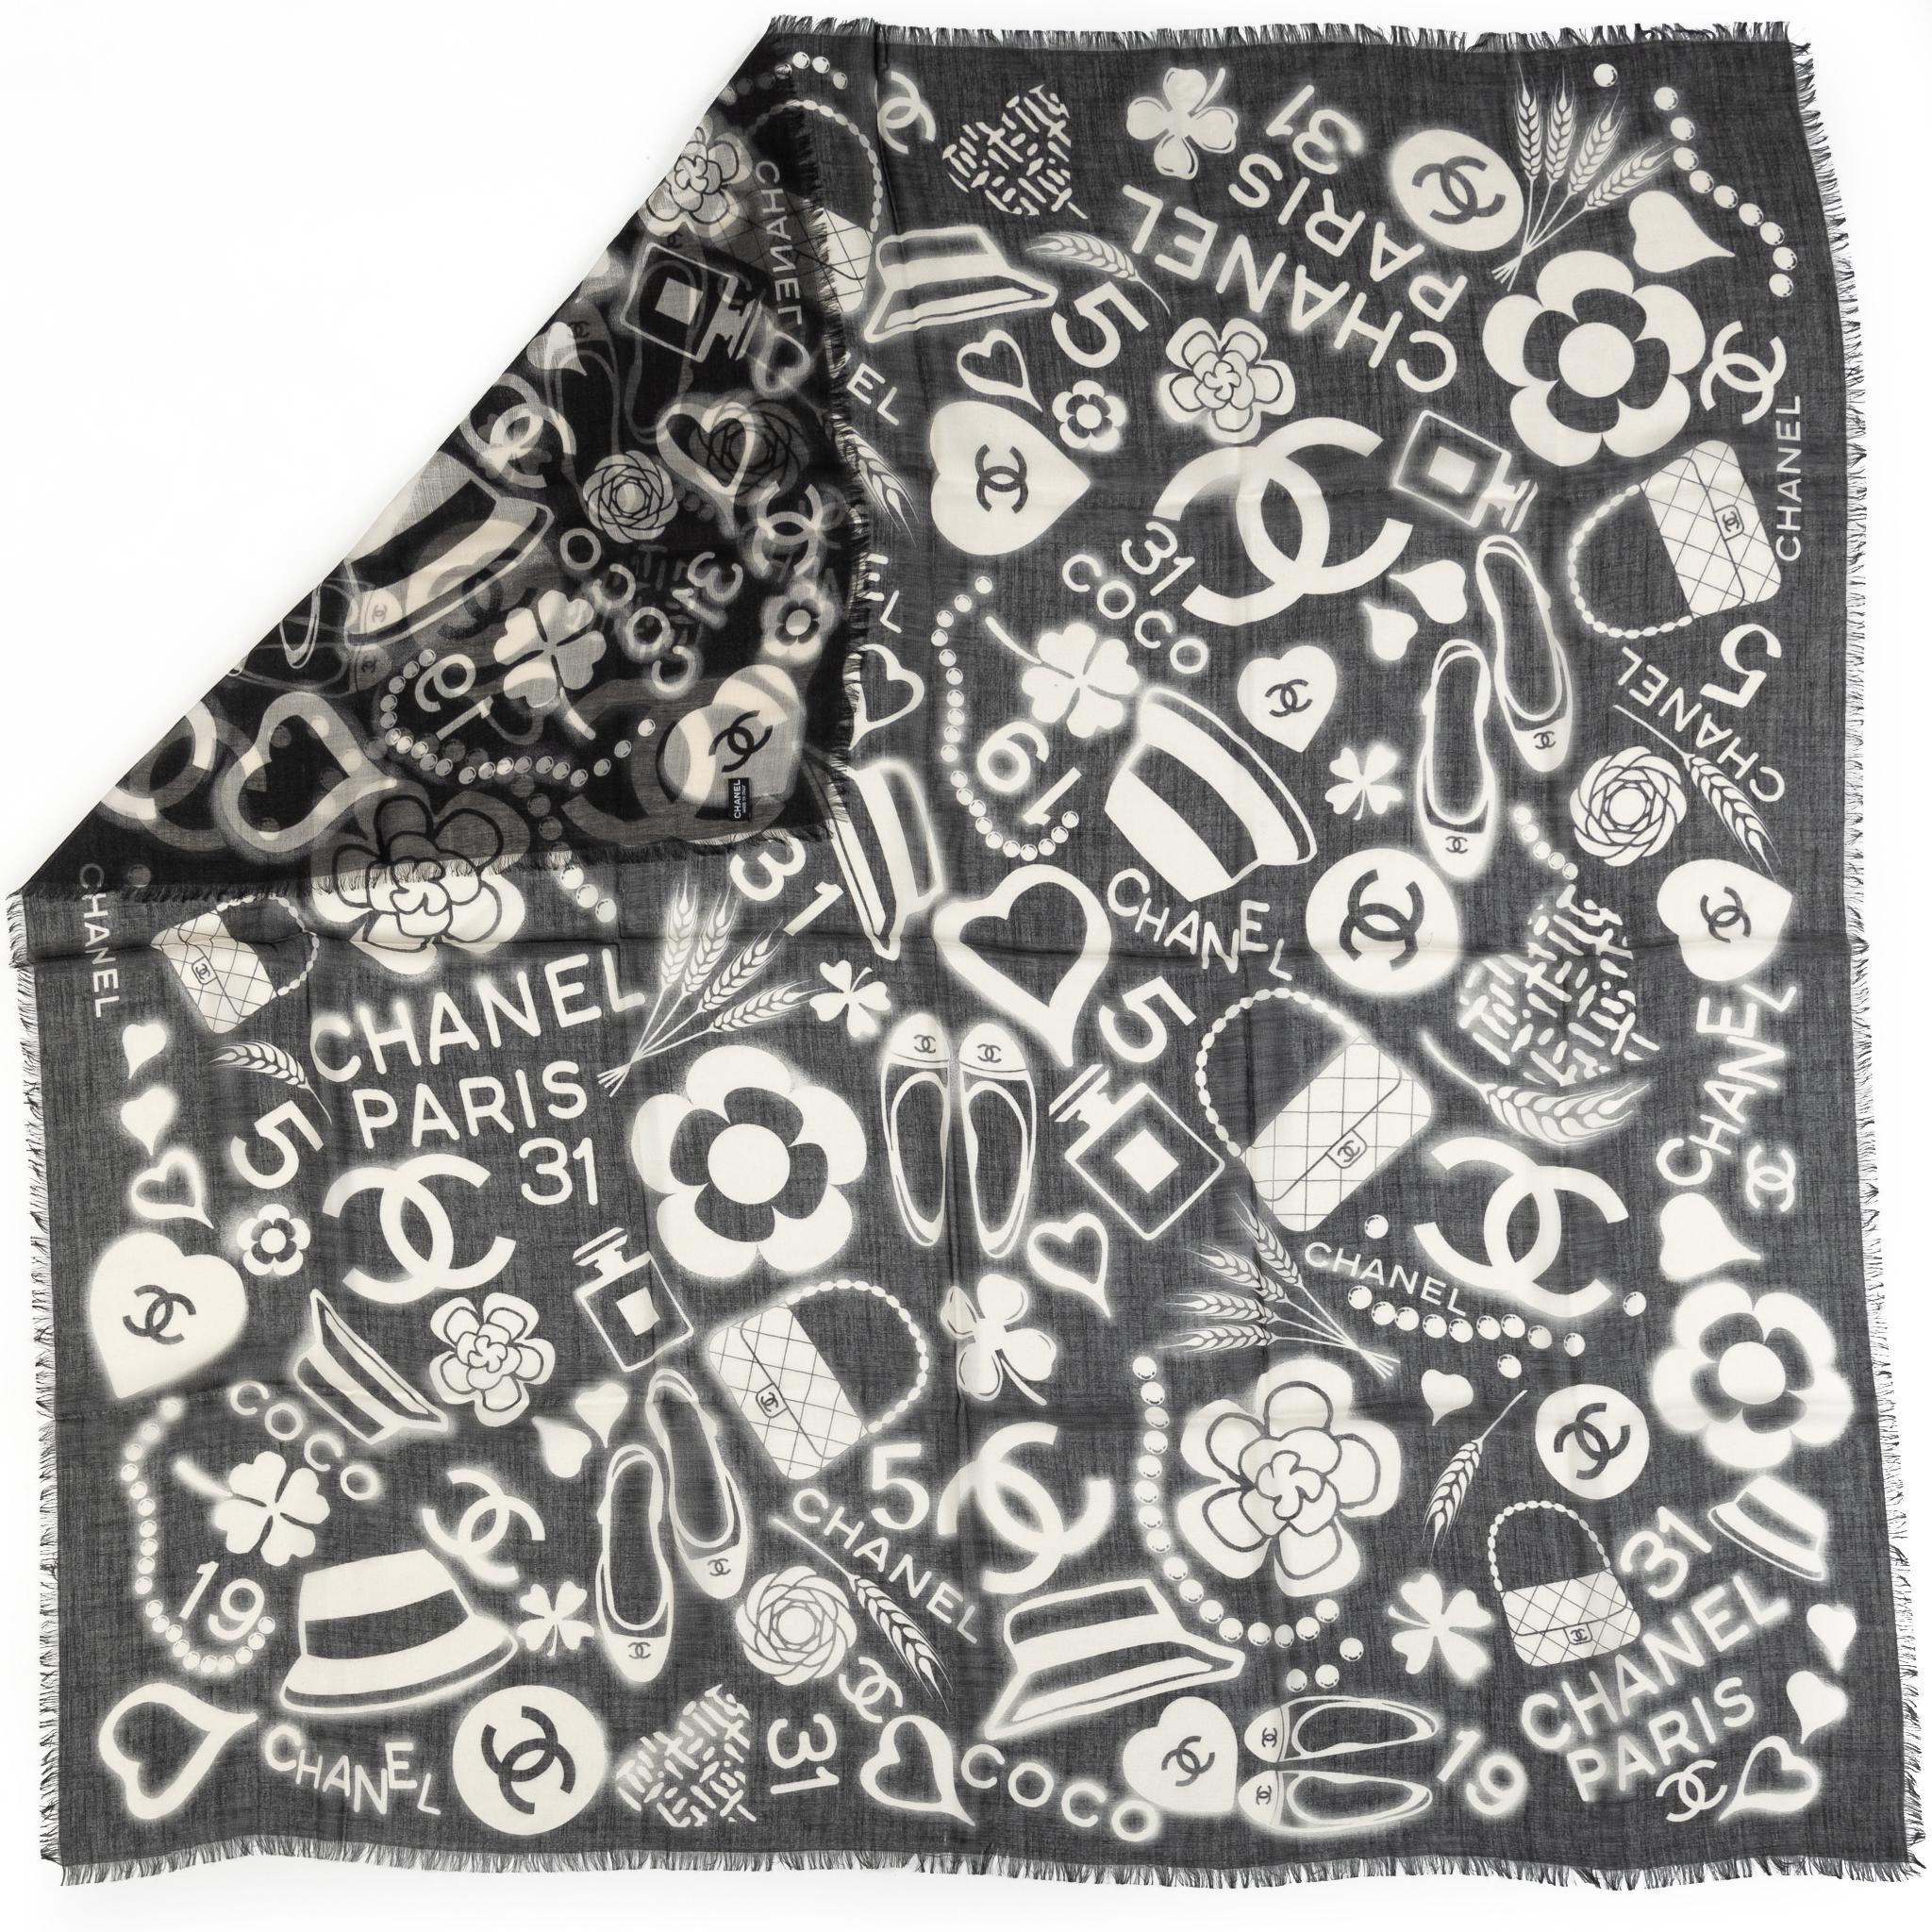 Chanel brand new 65% cashmere 35% silk black and white iconic symbols square oversize shawl. Comes with original tag.
